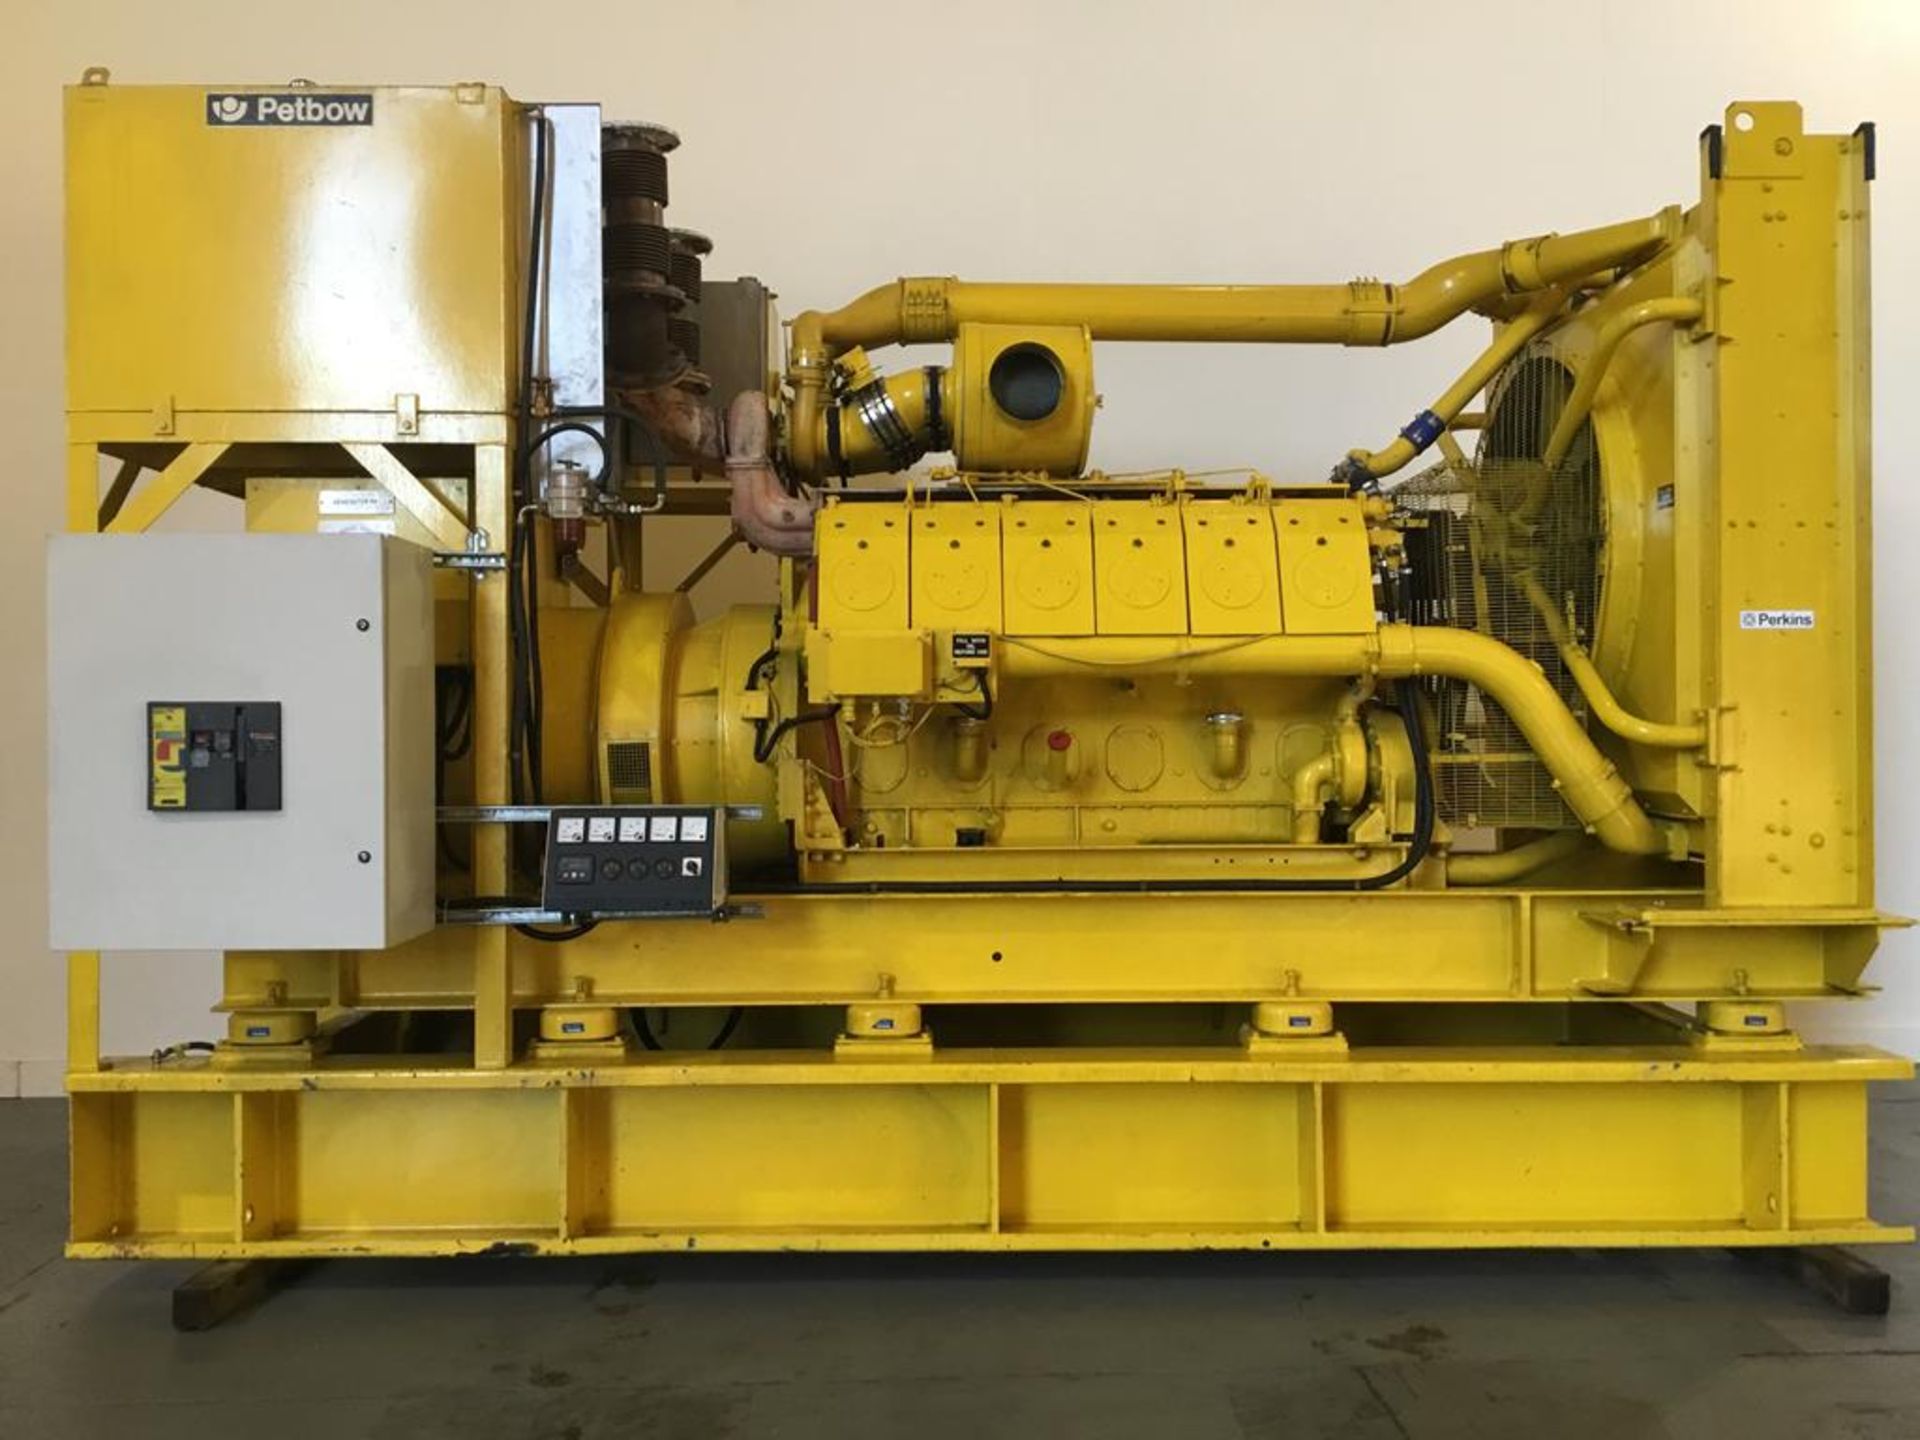 Dorman 1000kva Diesel Generator - Image 6 of 11